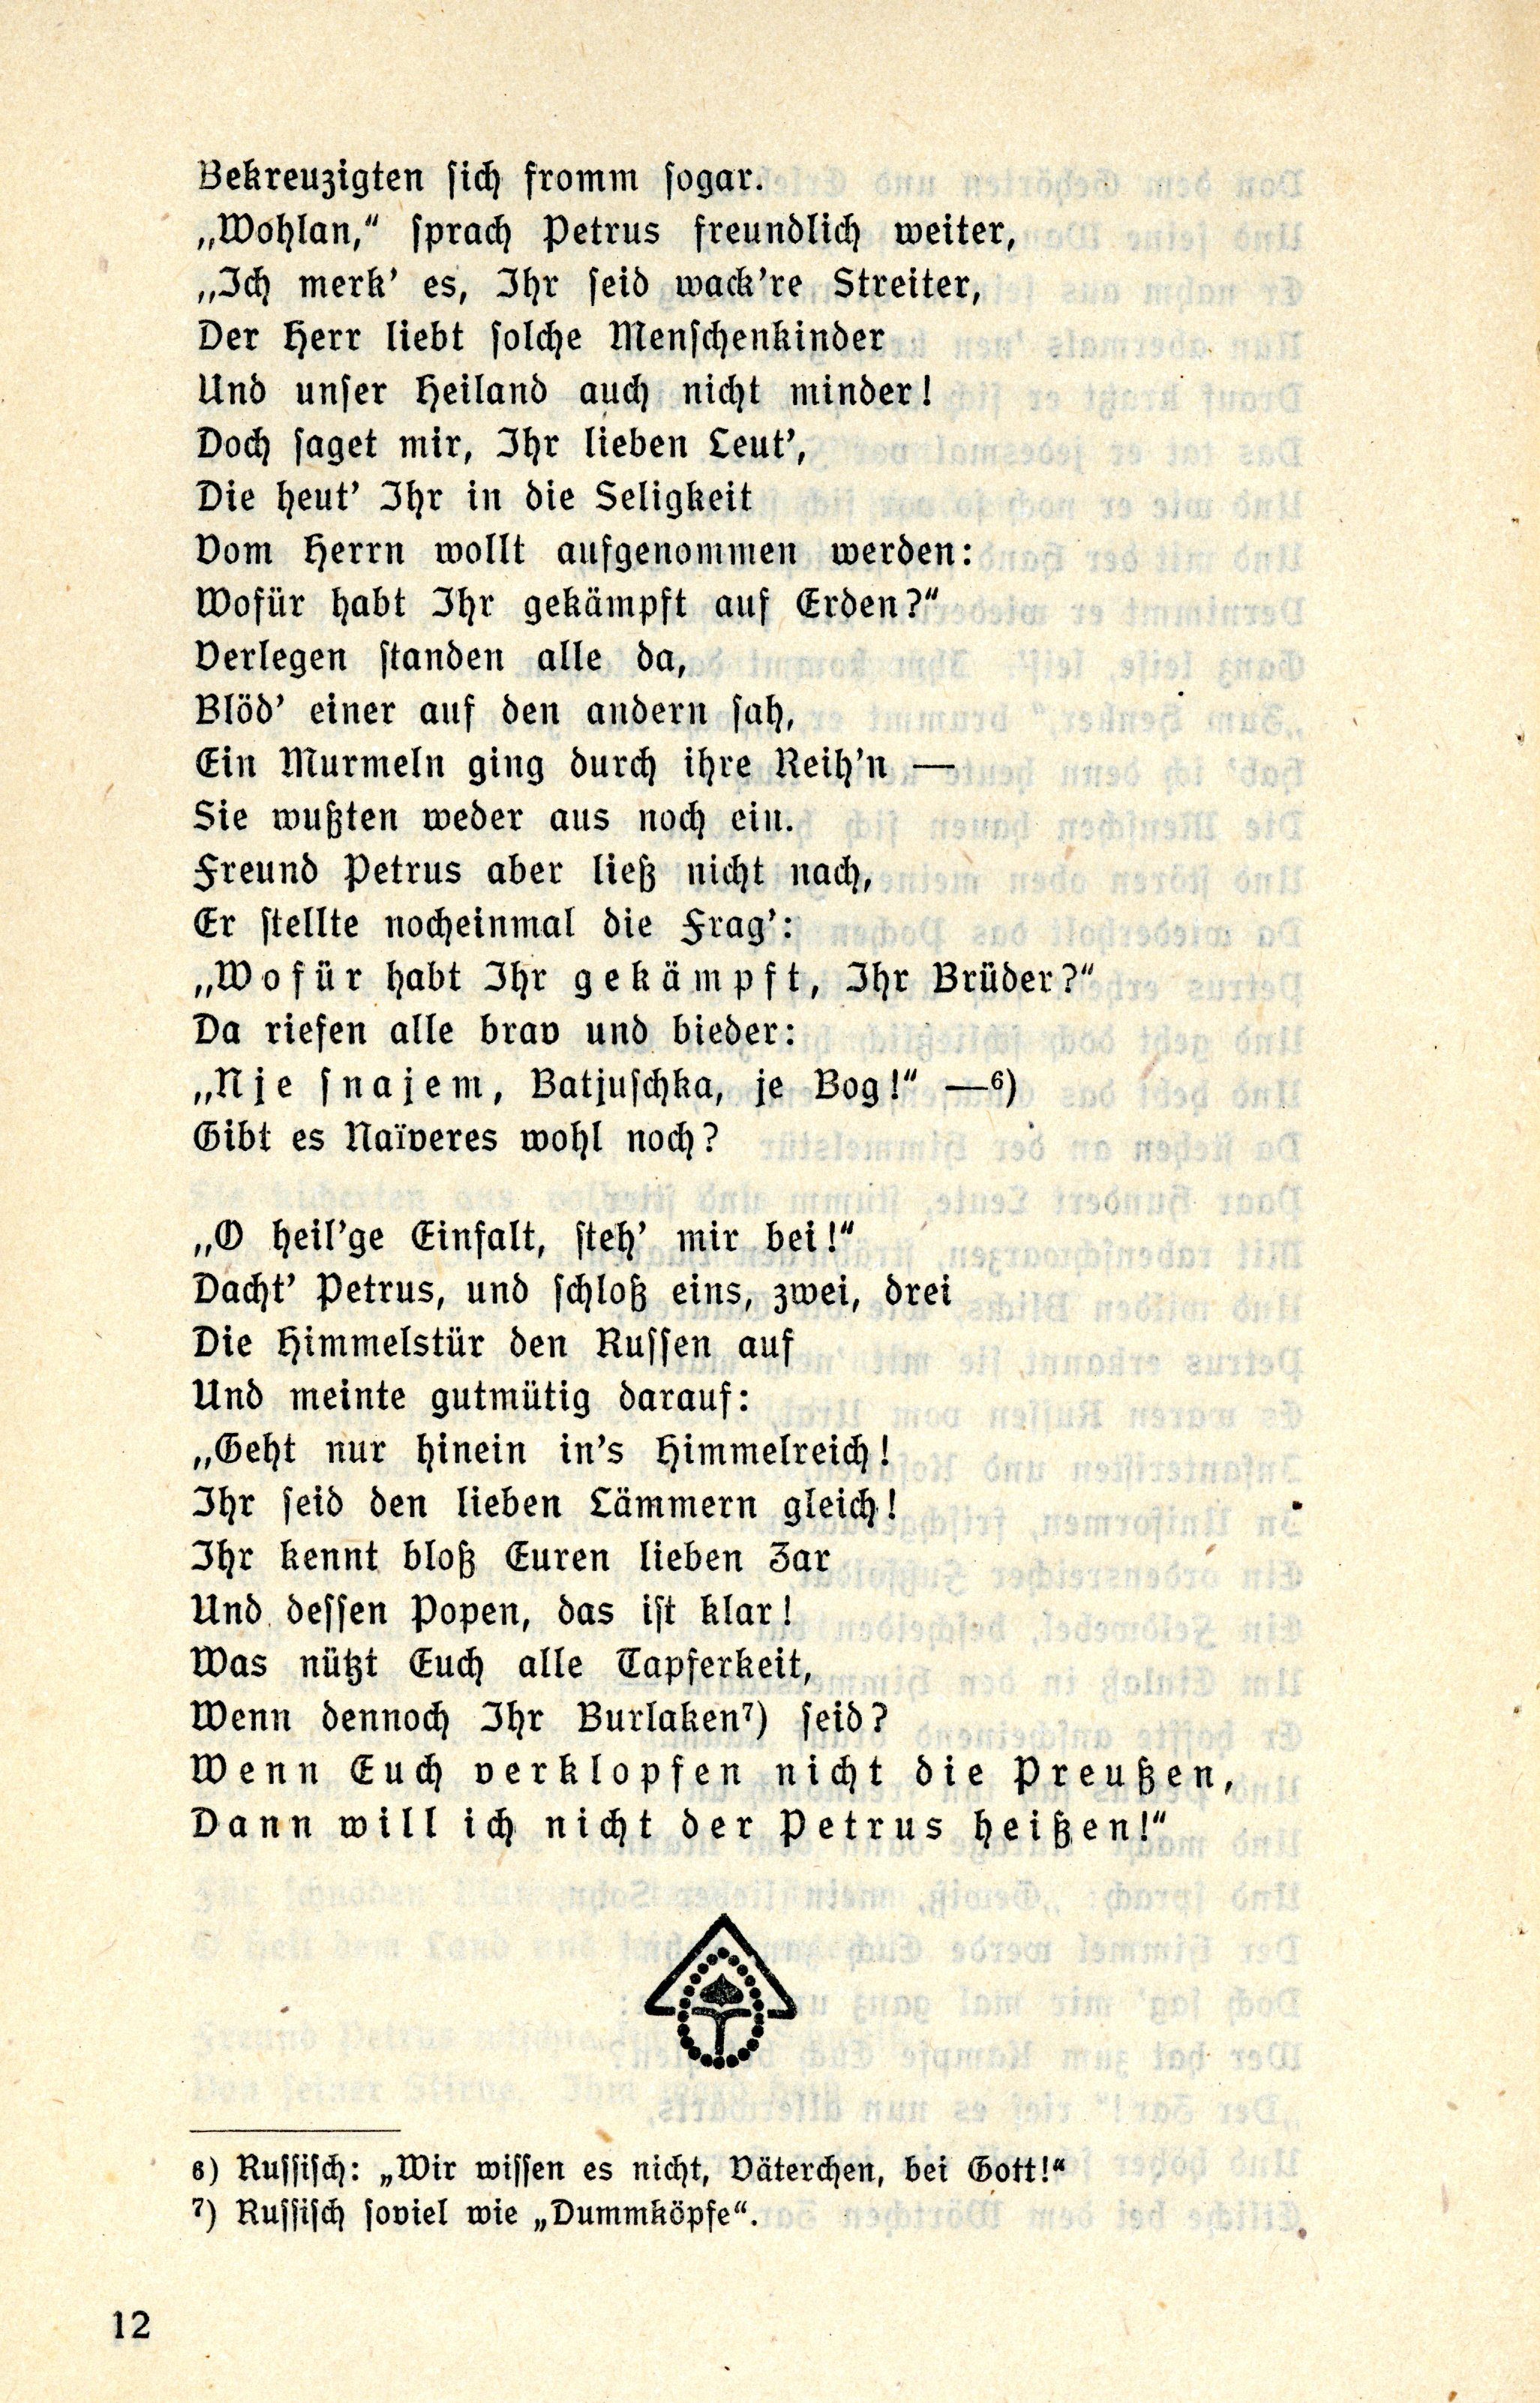 Der Balte im Maulkorb (1917) | 13. (12) Main body of text